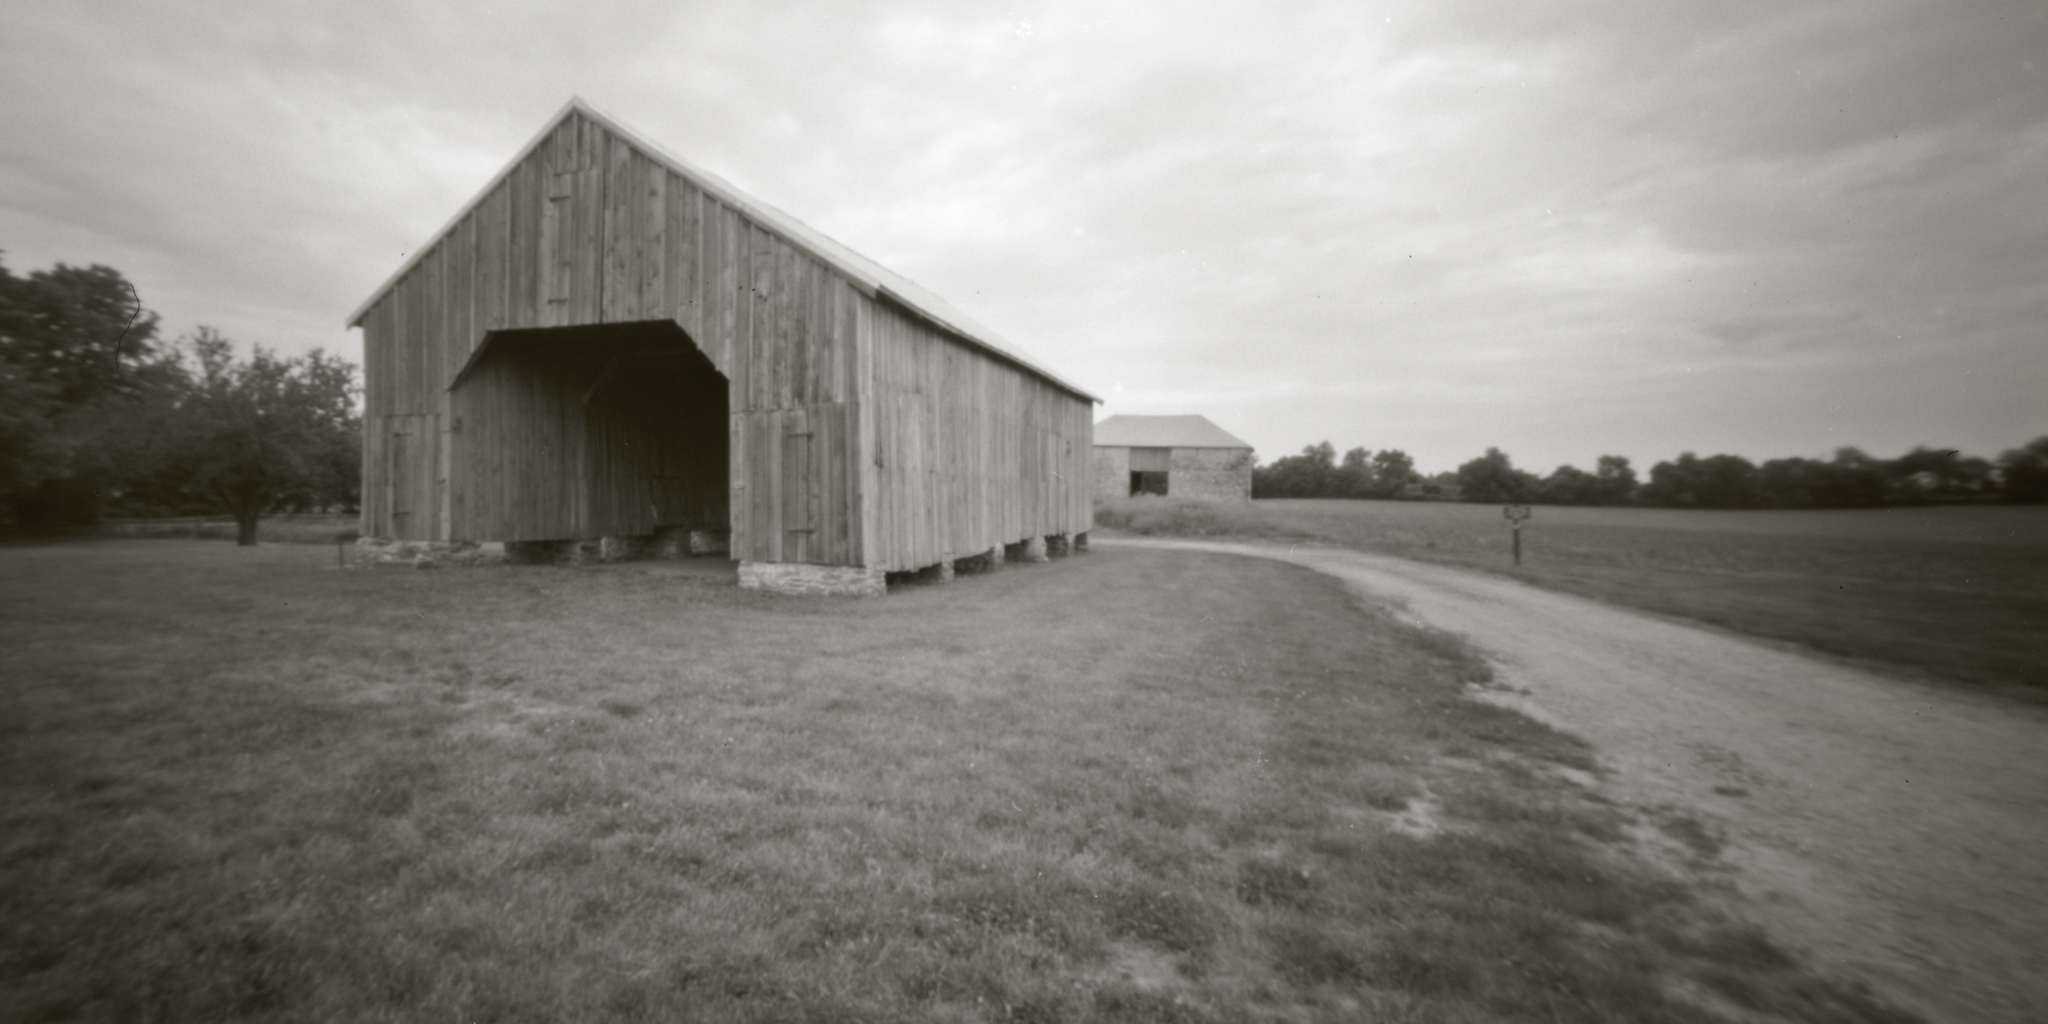  Best Farm at Monocacy National Battlefield.&nbsp; Frederick, Maryland.&nbsp; Leonardo 38mm 4x5 Pinhole camera. 